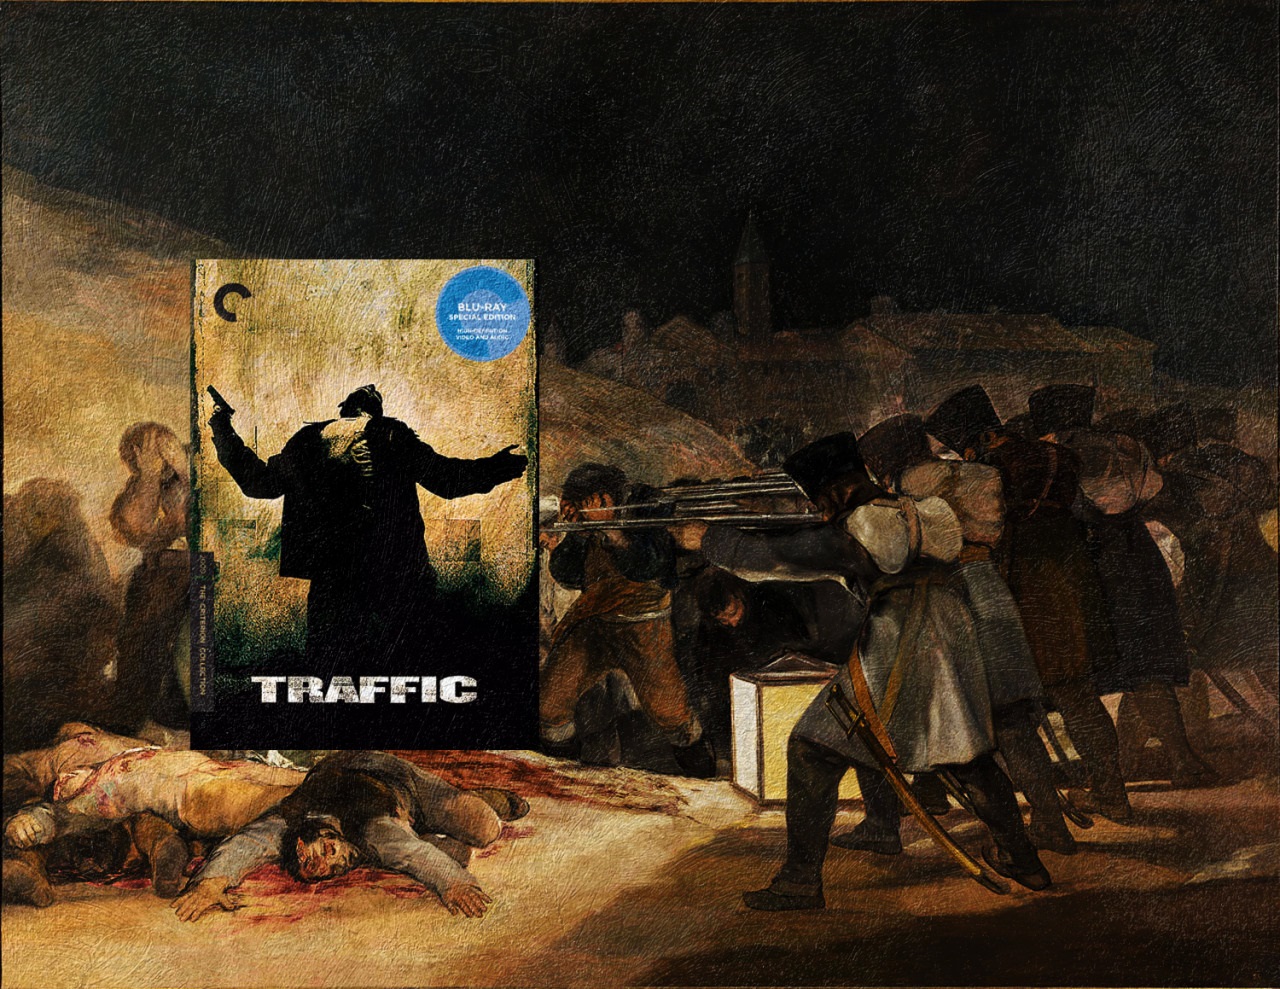 Traffic by Steven Soderbergh + El Tres de Mayo by Francisco de Goya